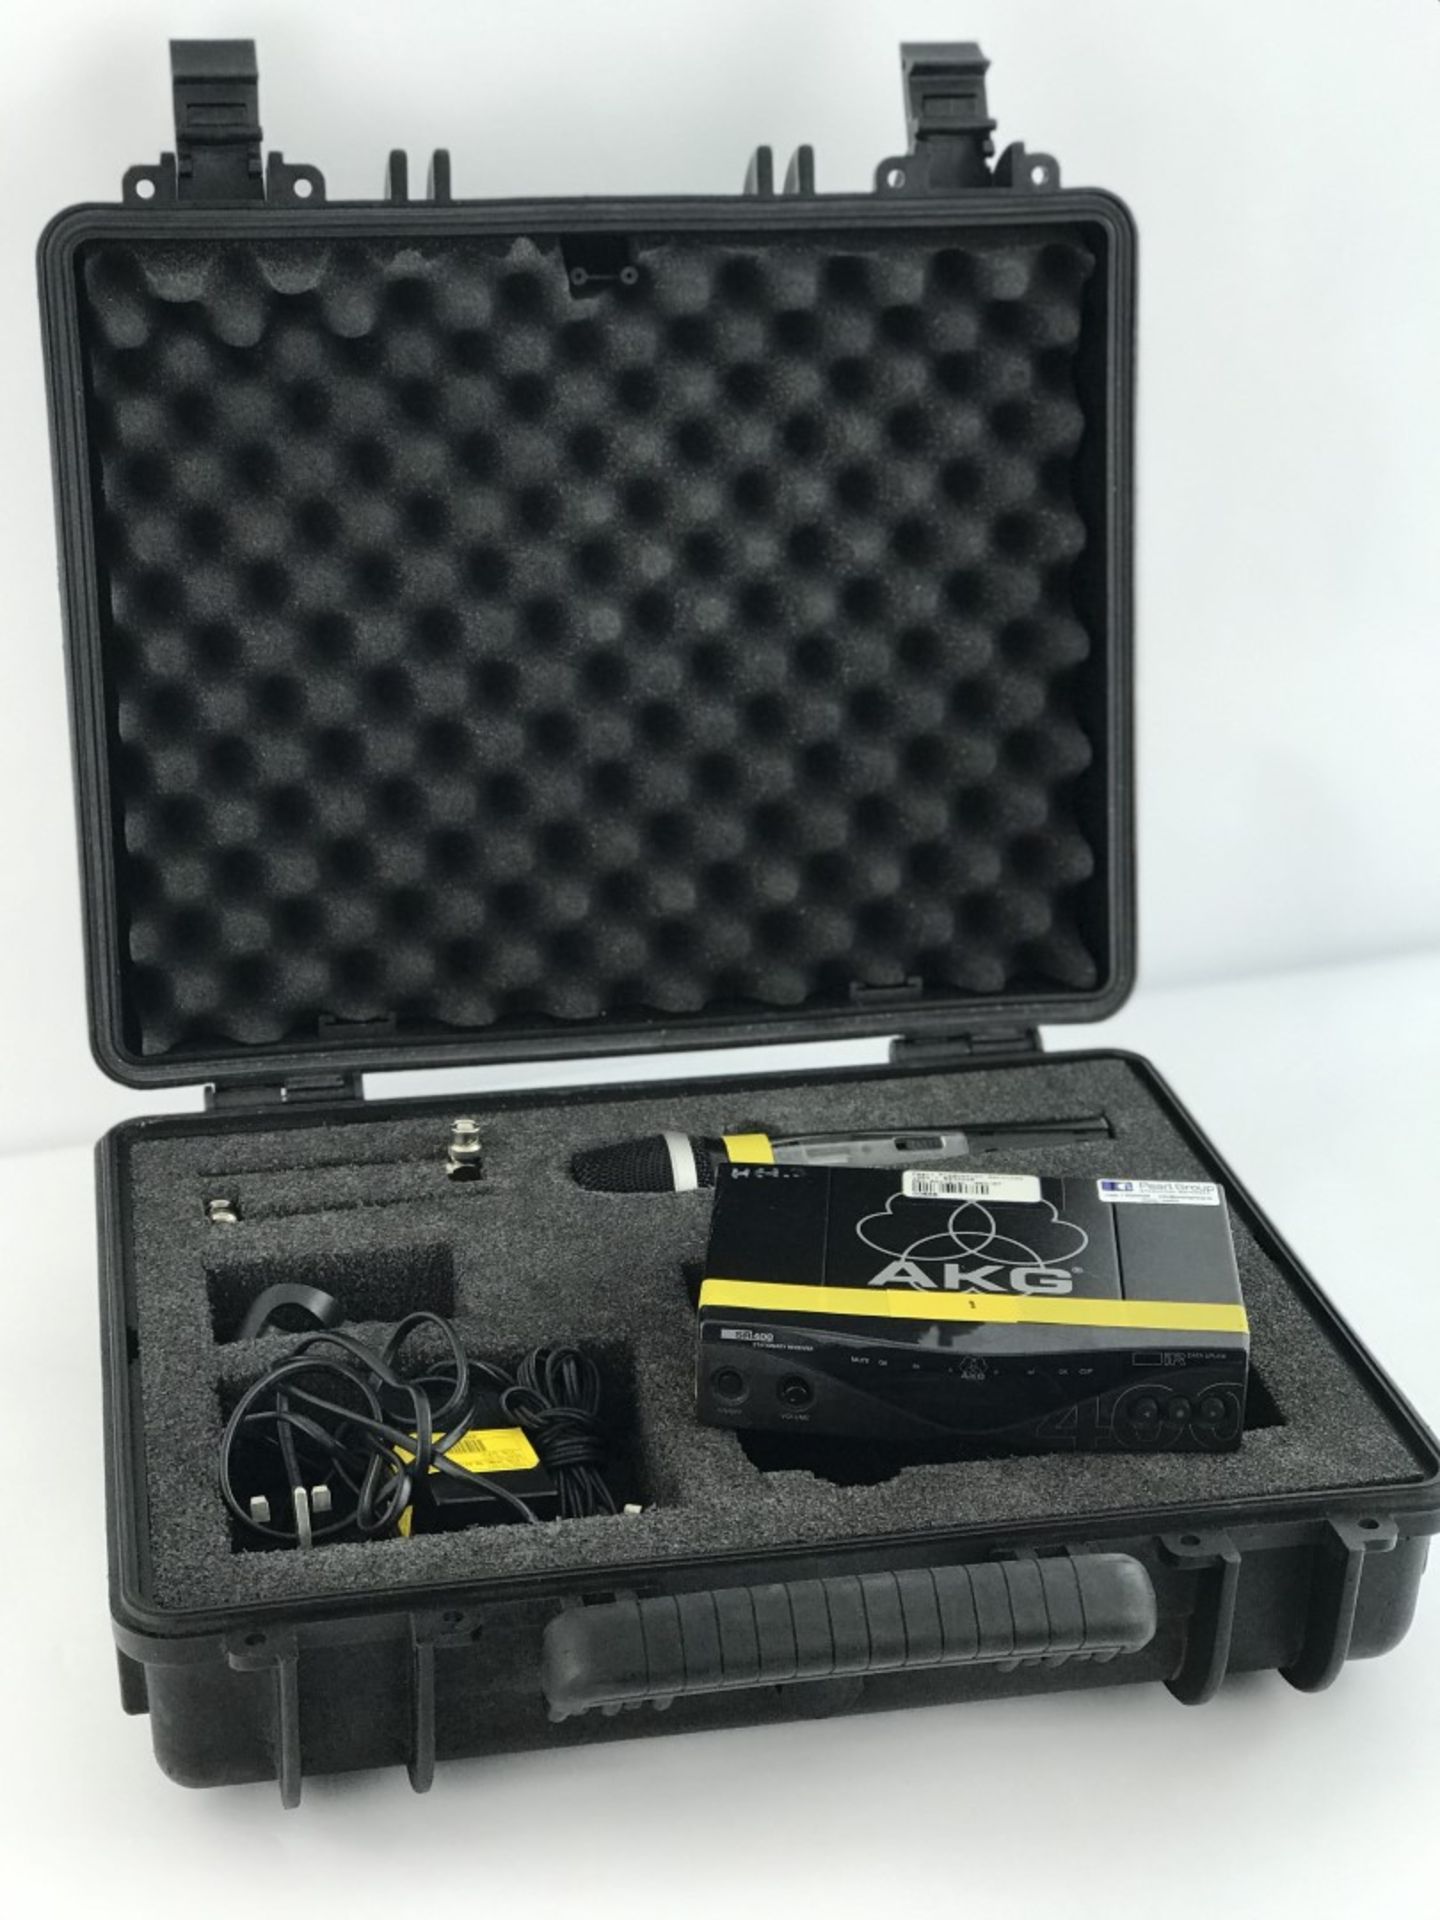 1 x AKG SR450 Lapel Radio Microphone & Receiver With Aerials & PSU In Hard Flight Case. - Ref: 5 -